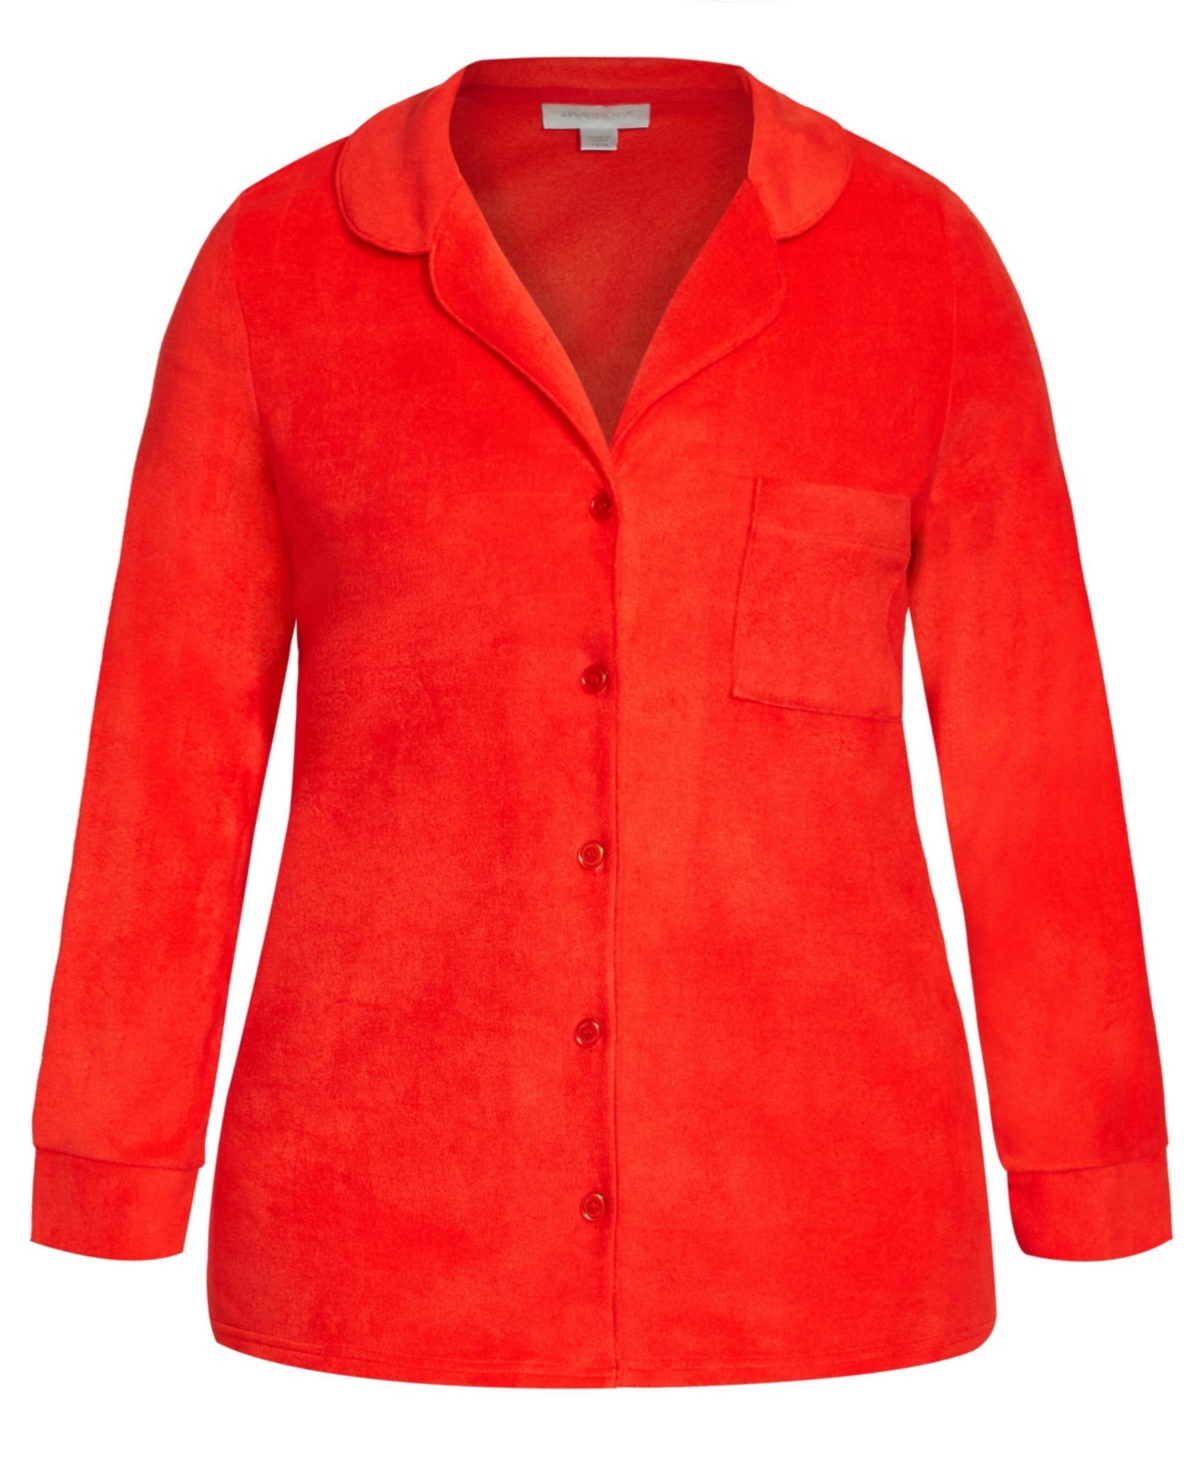 Plus Size Plain Button Fleece Sleep Top - Red